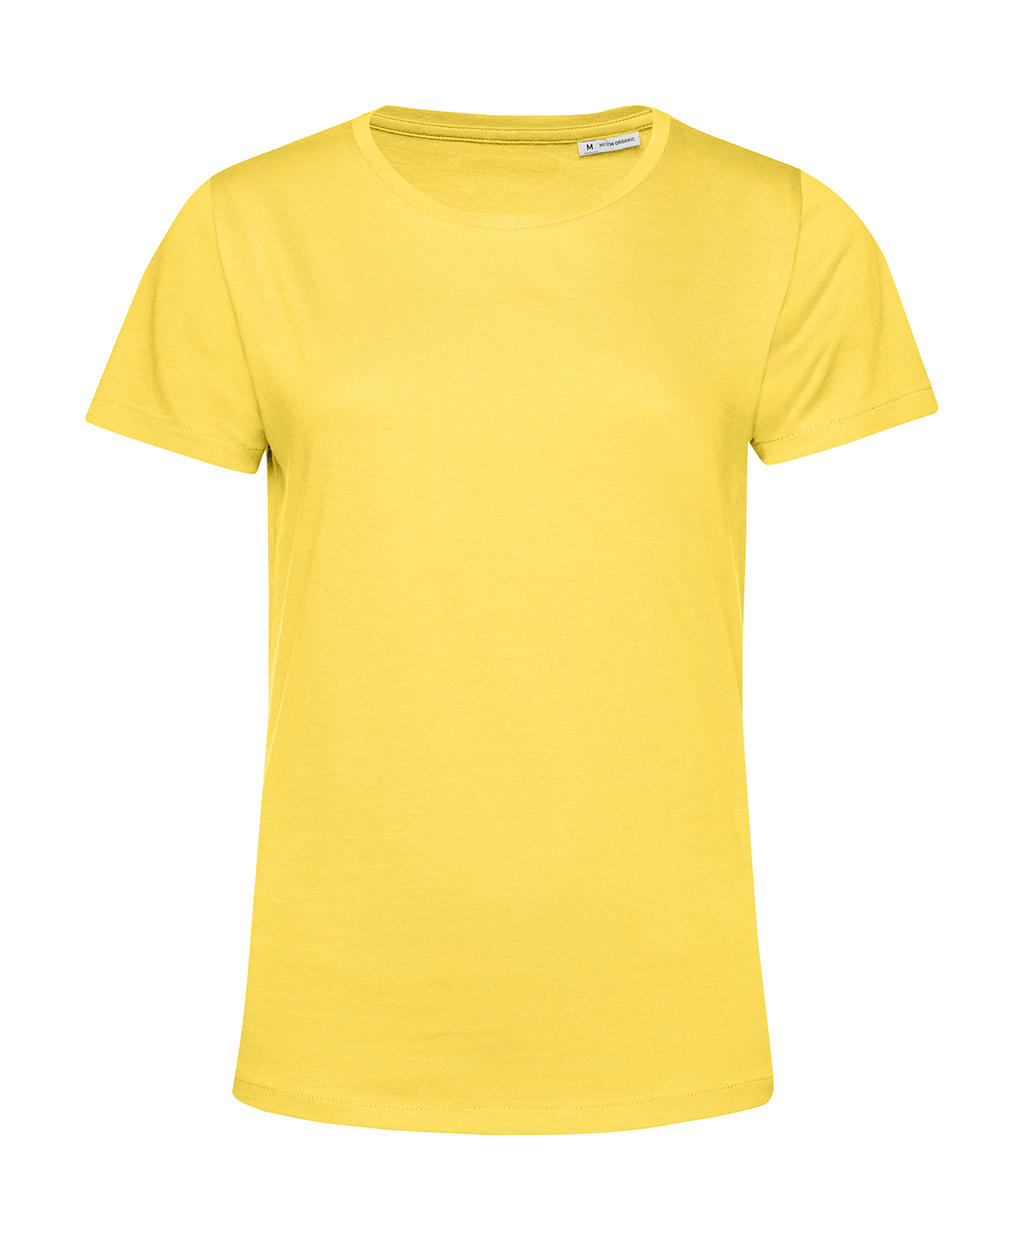 Tričko dámské BC Organic Inspire E150 - žluté, L